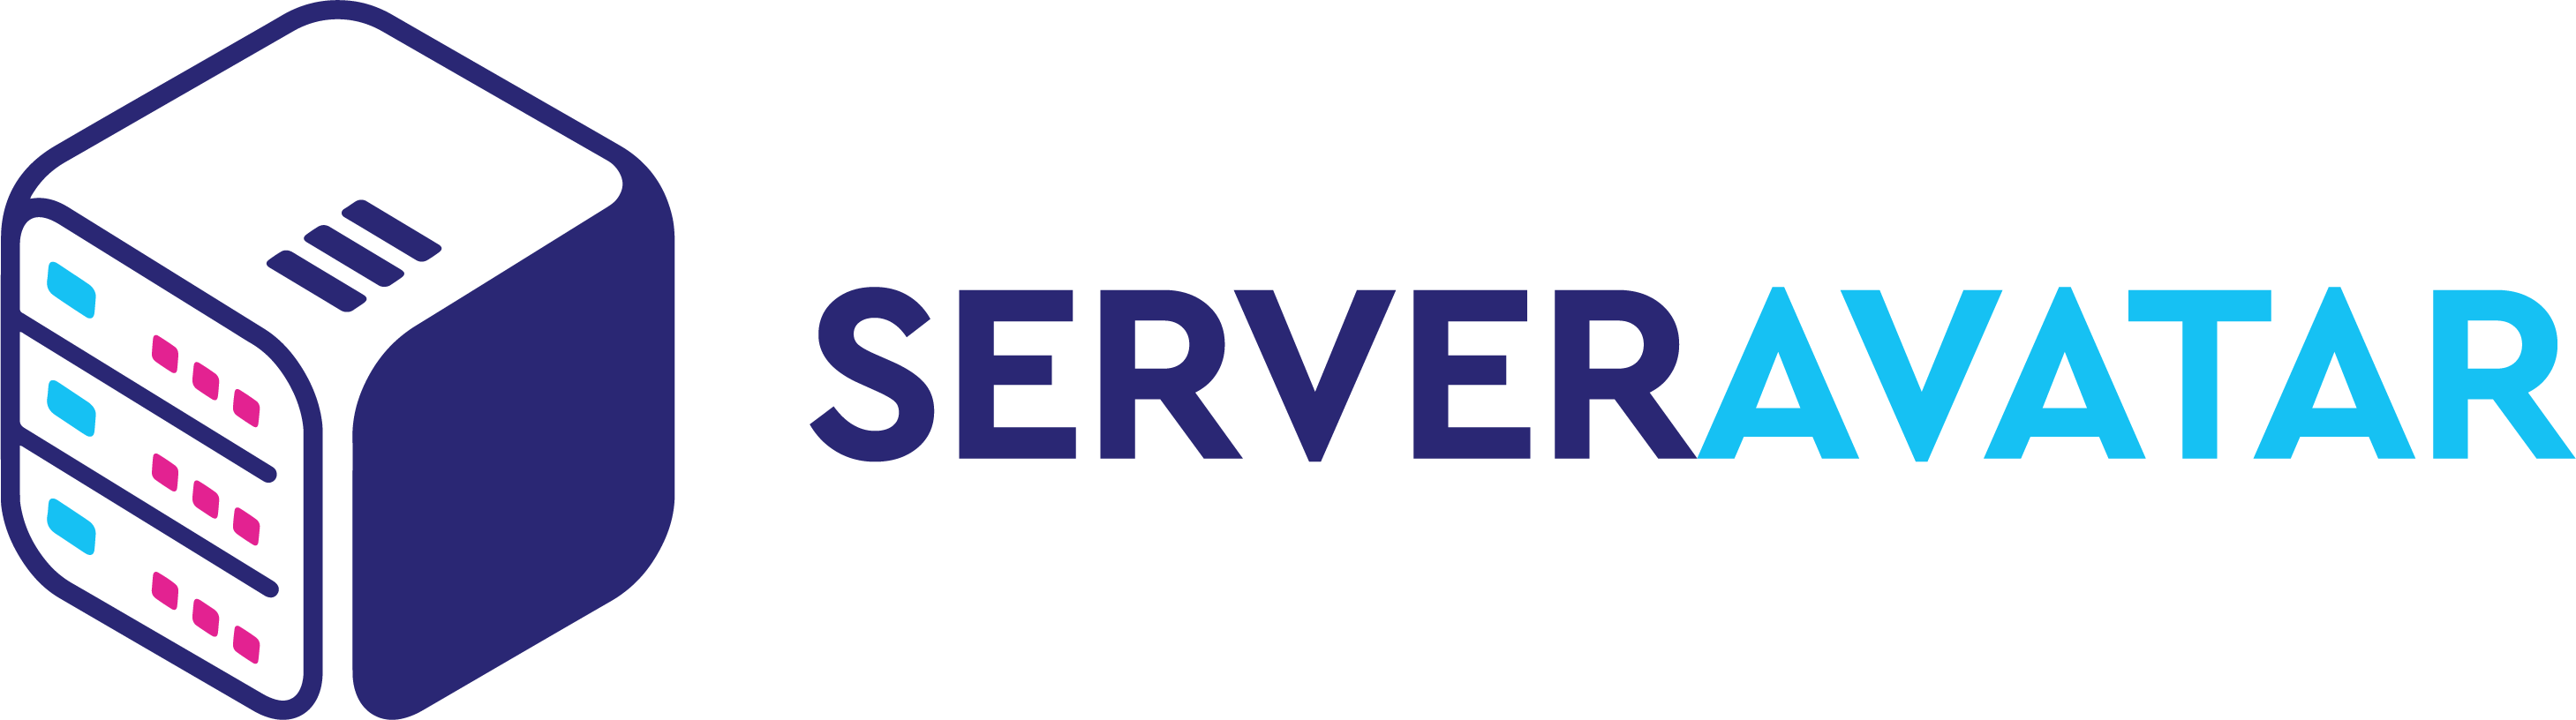 ServerAvatar Logo